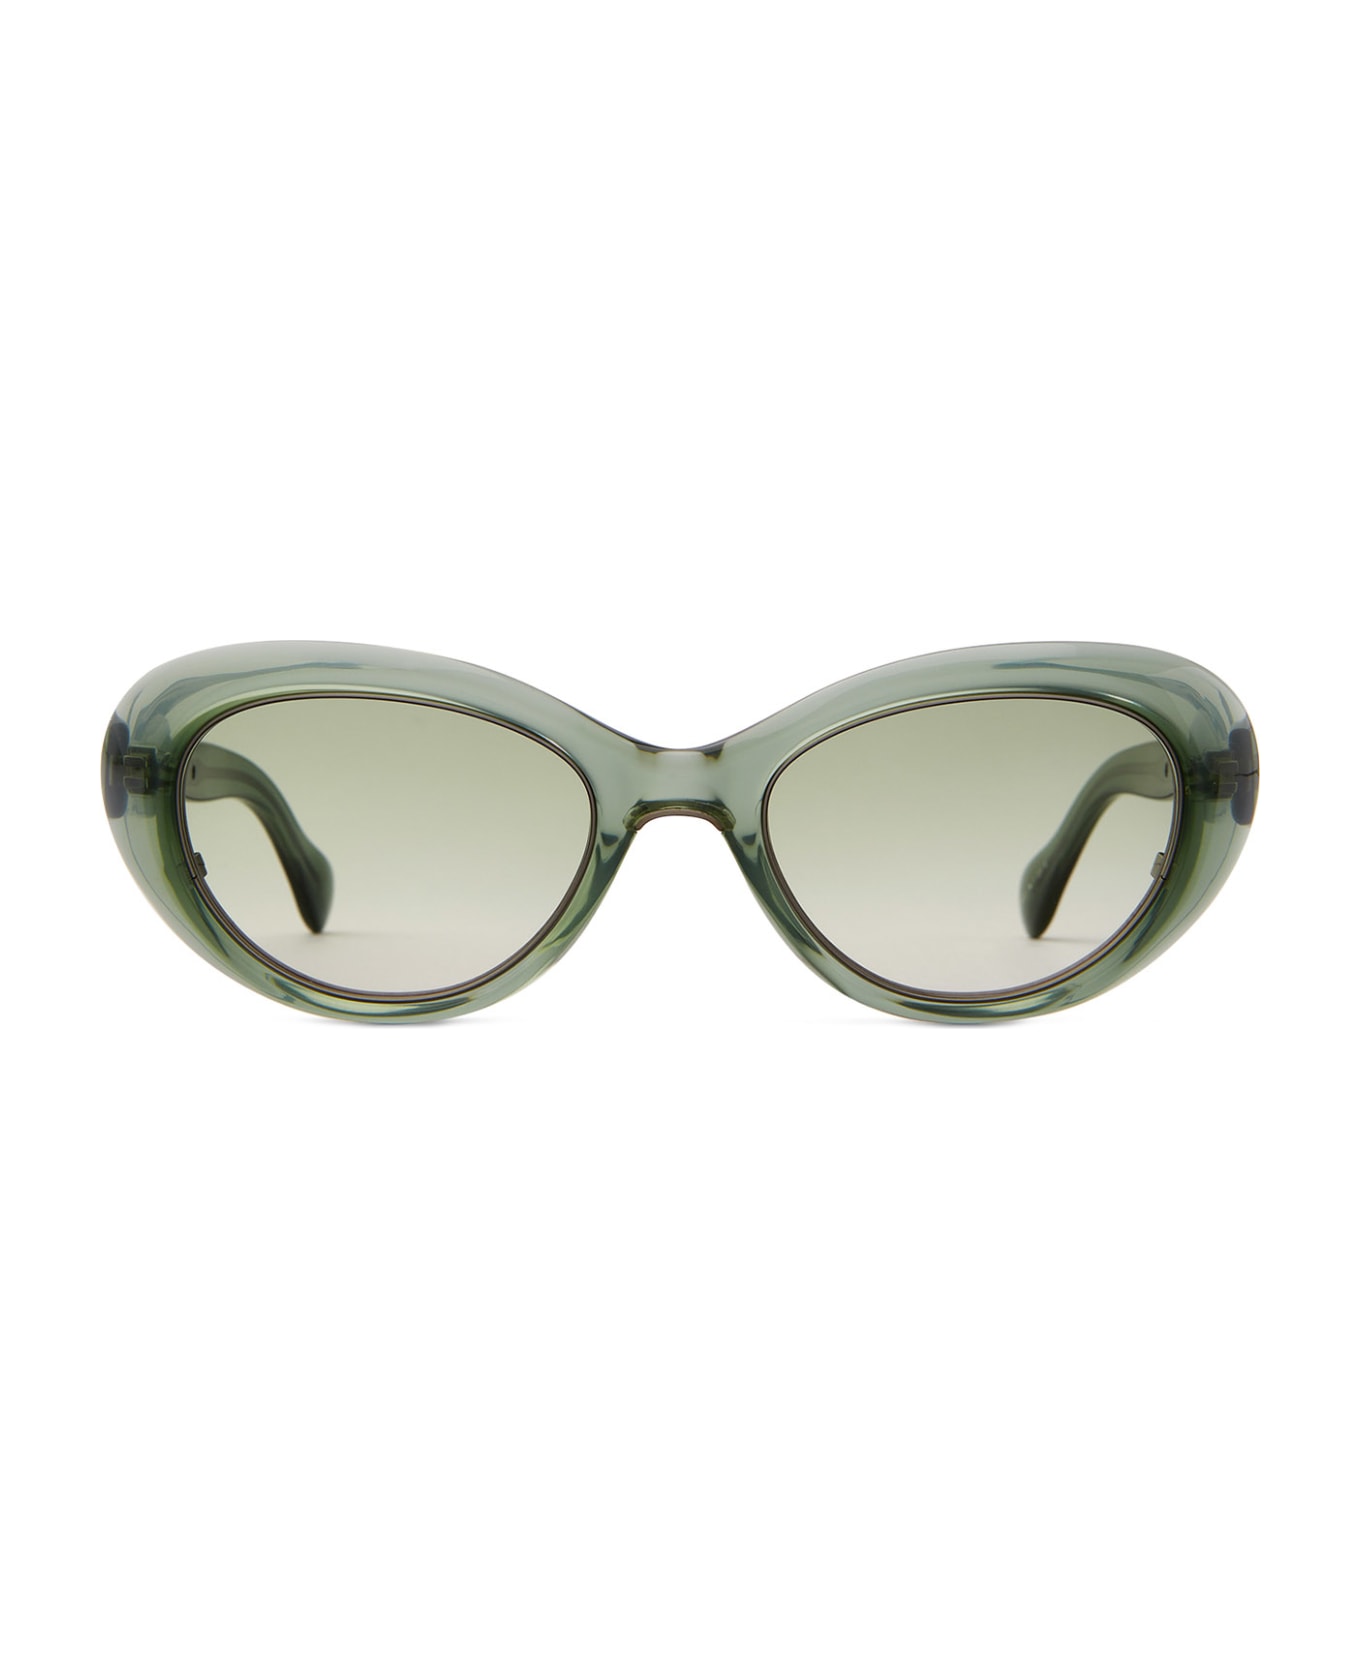 Mr. Leight Selma S Eucalyptus Sunglasses - Eucalyptus